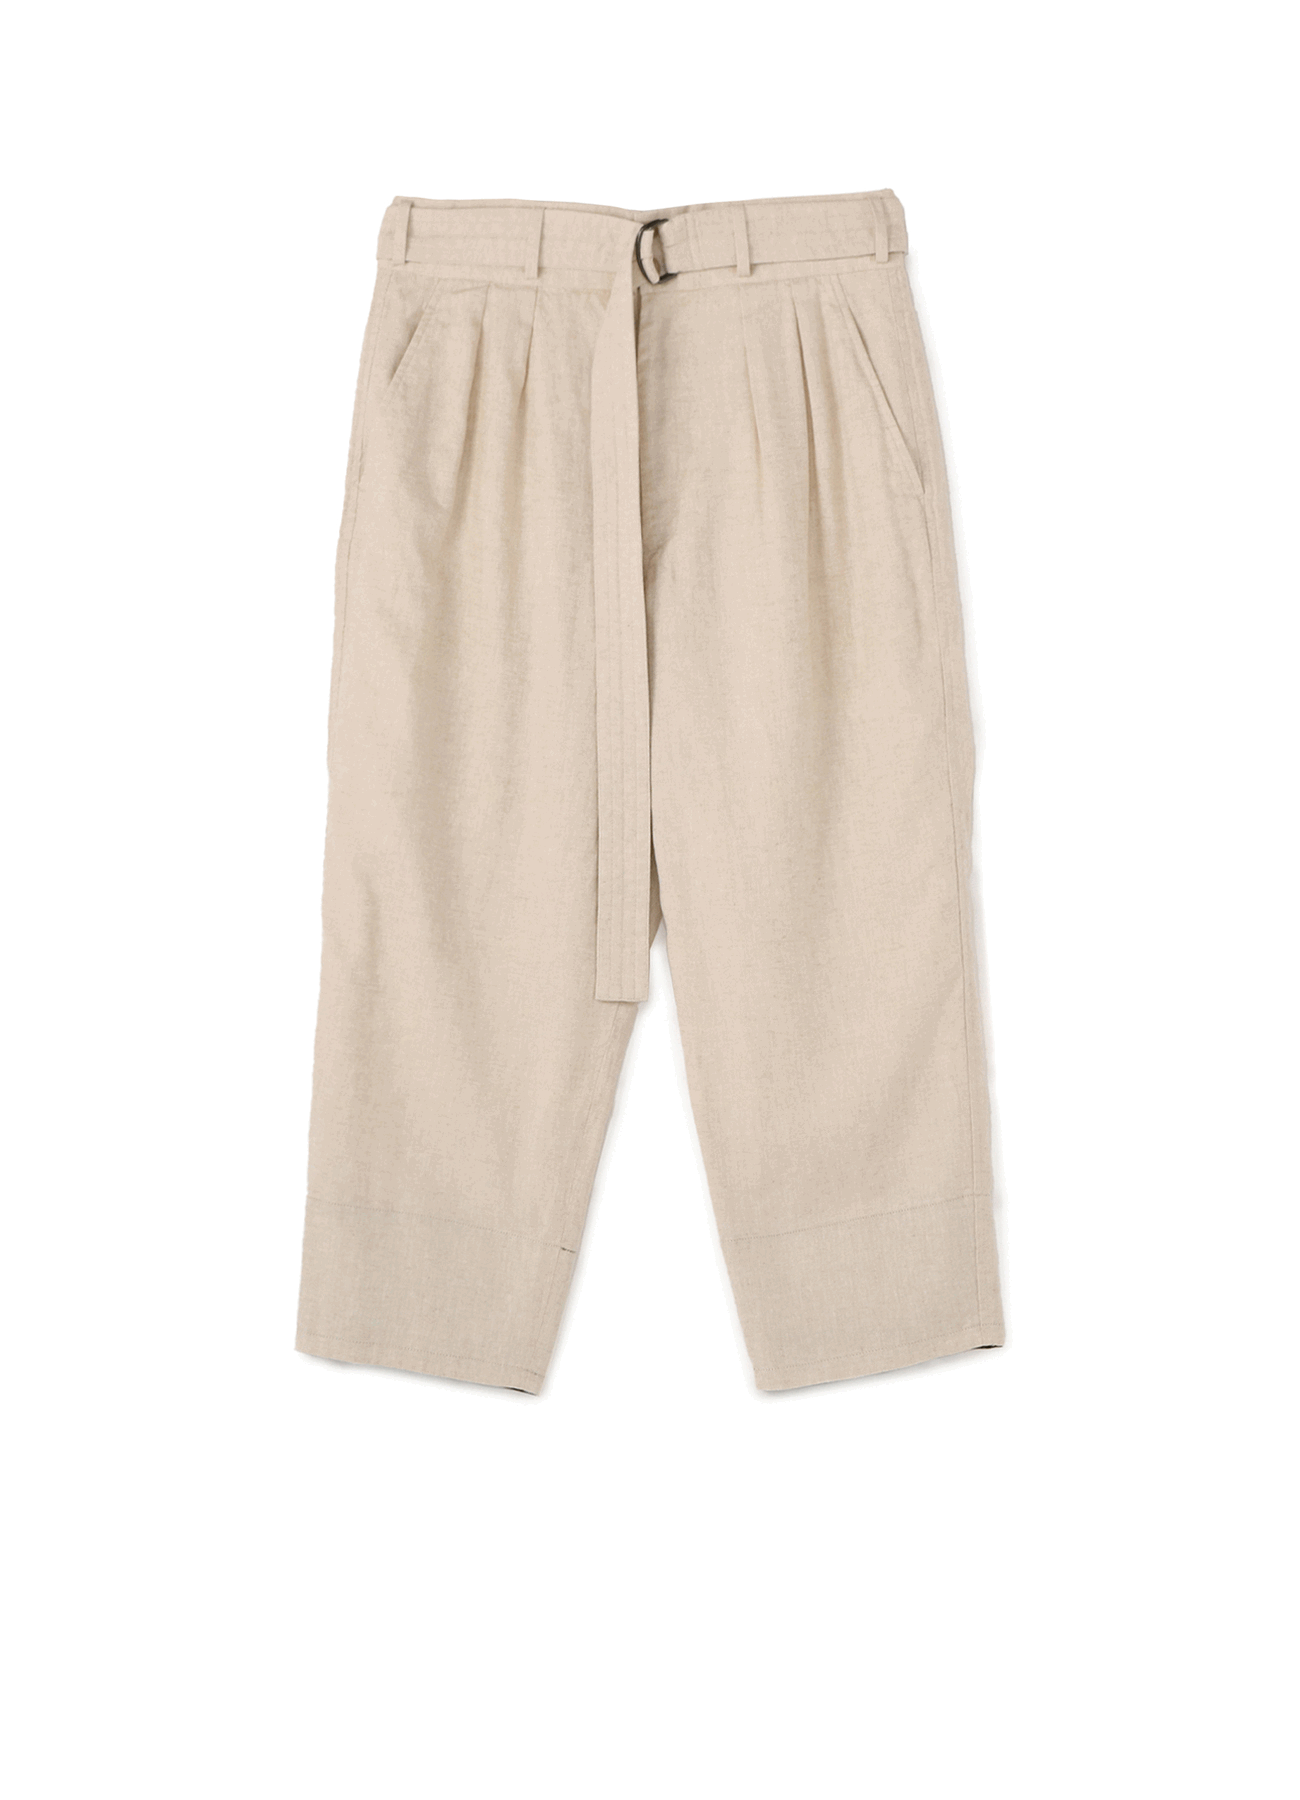 Li/C Washer Twill Tie Dye 2-Tuck Tapered Belt Pants